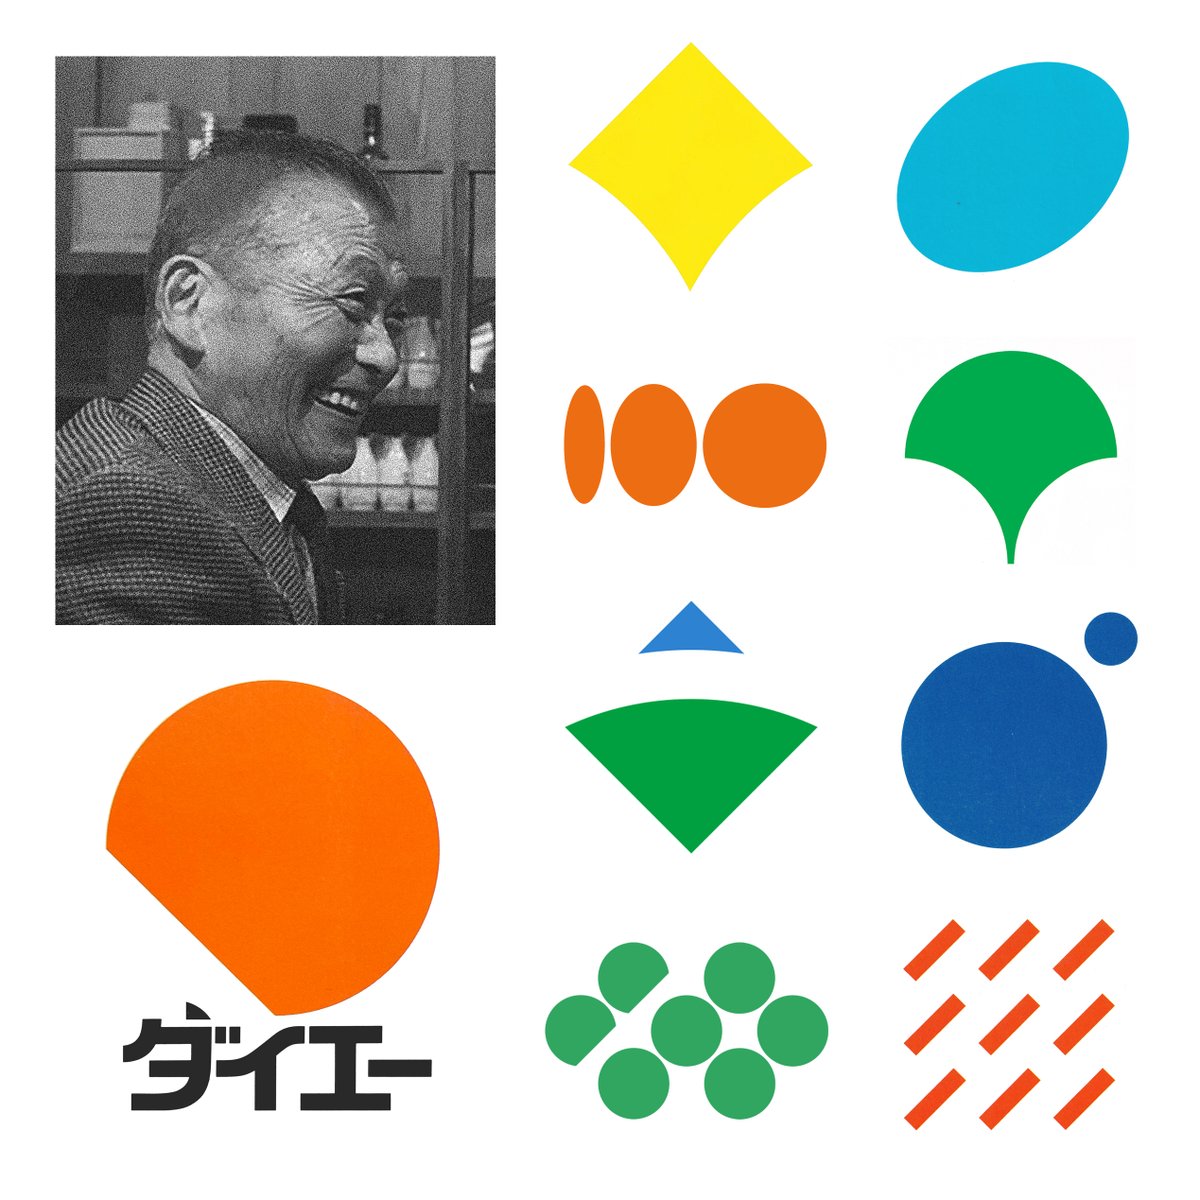 The logos of Japanese designer Rei Yoshimura
Discover more Japanese logos at logo-archive.org

#logos #branding #logodesign #designhistory #graphicdesign